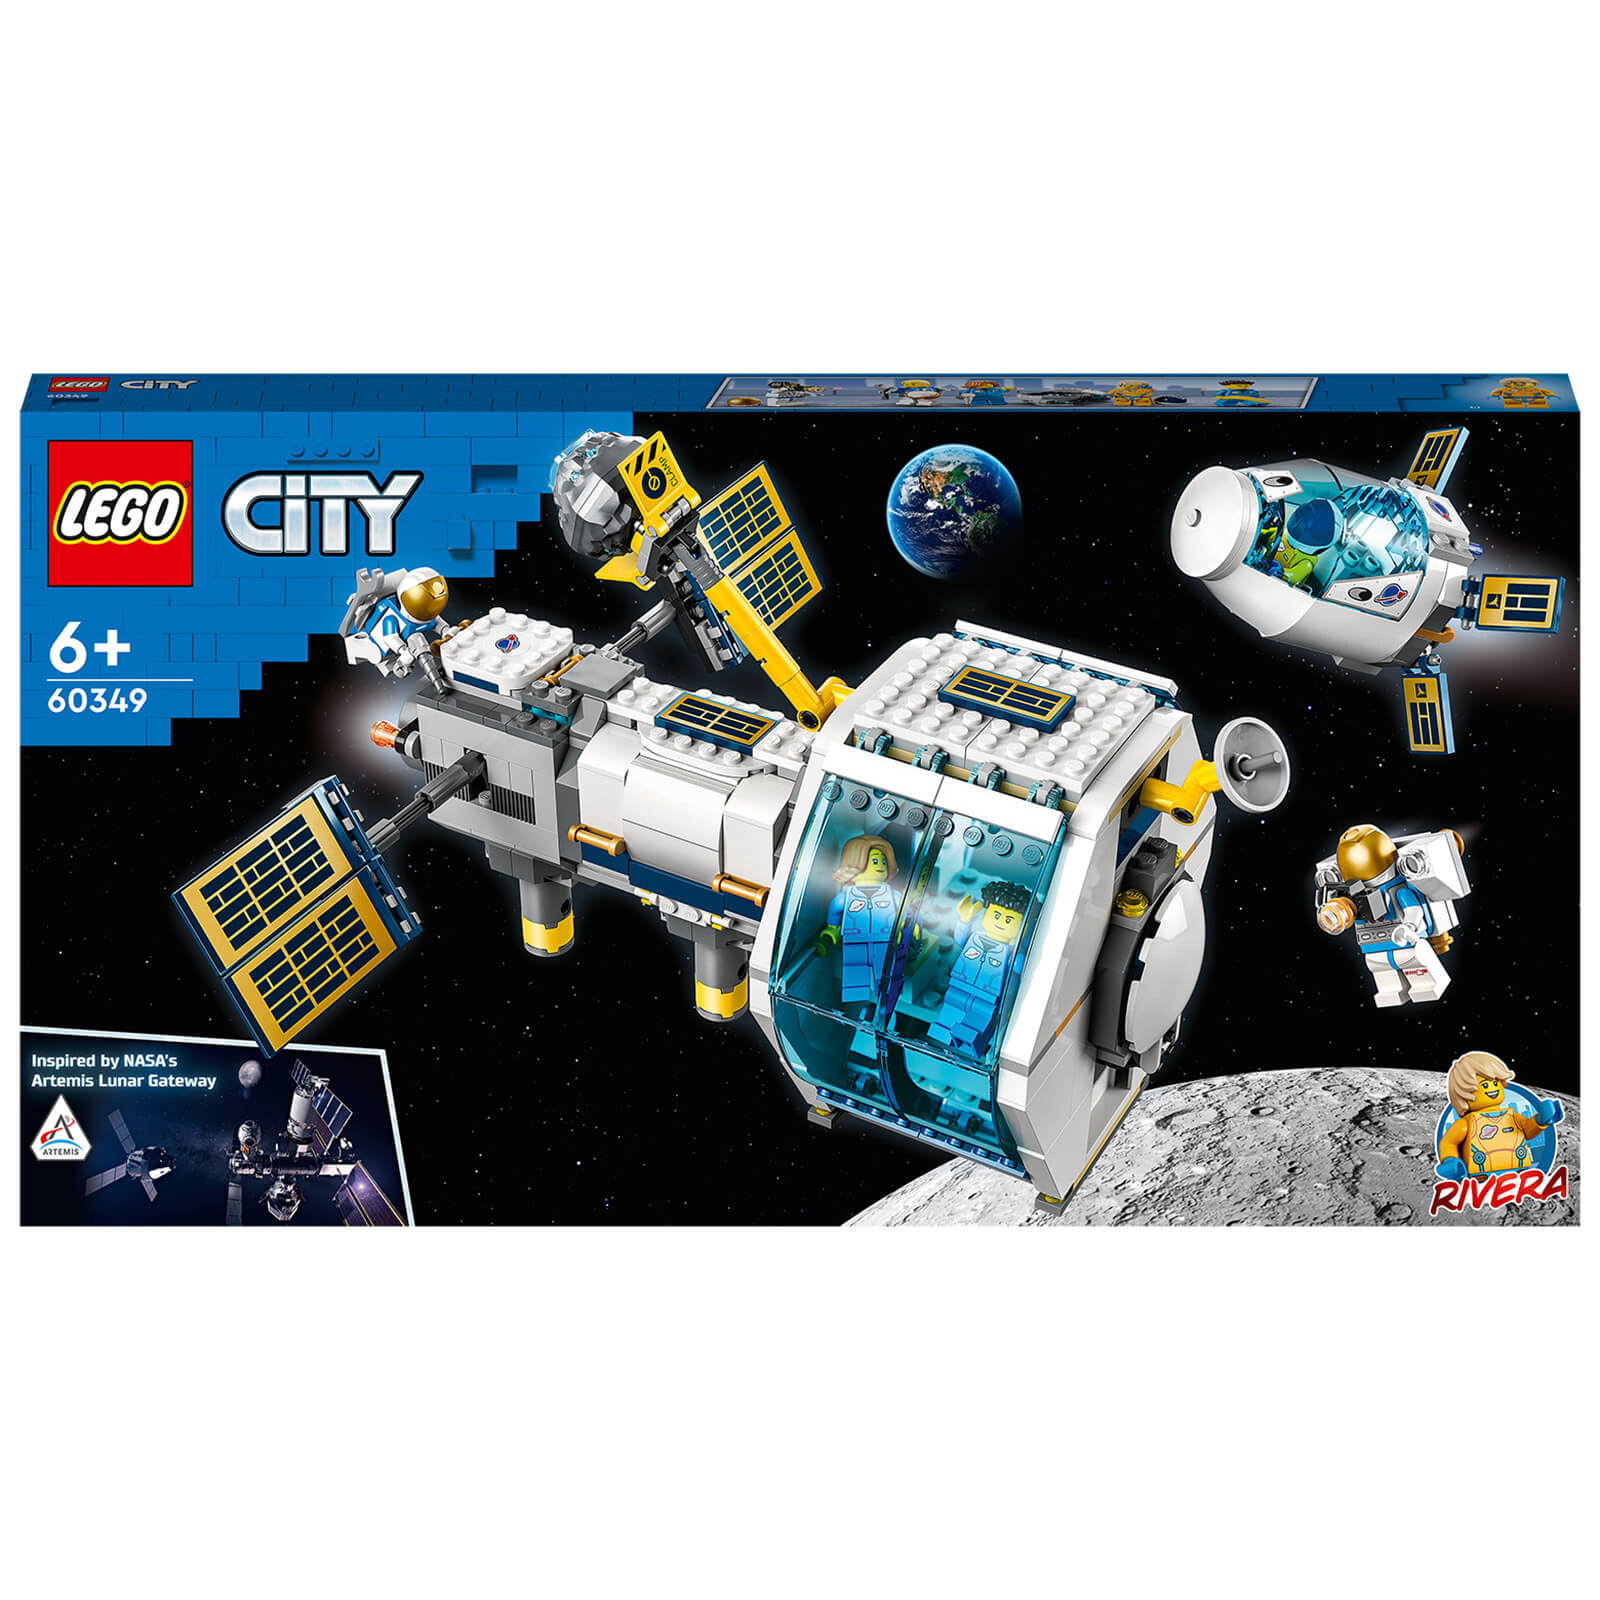 LEGO City: Lunar Space Station Toy Model Building Set (60349)